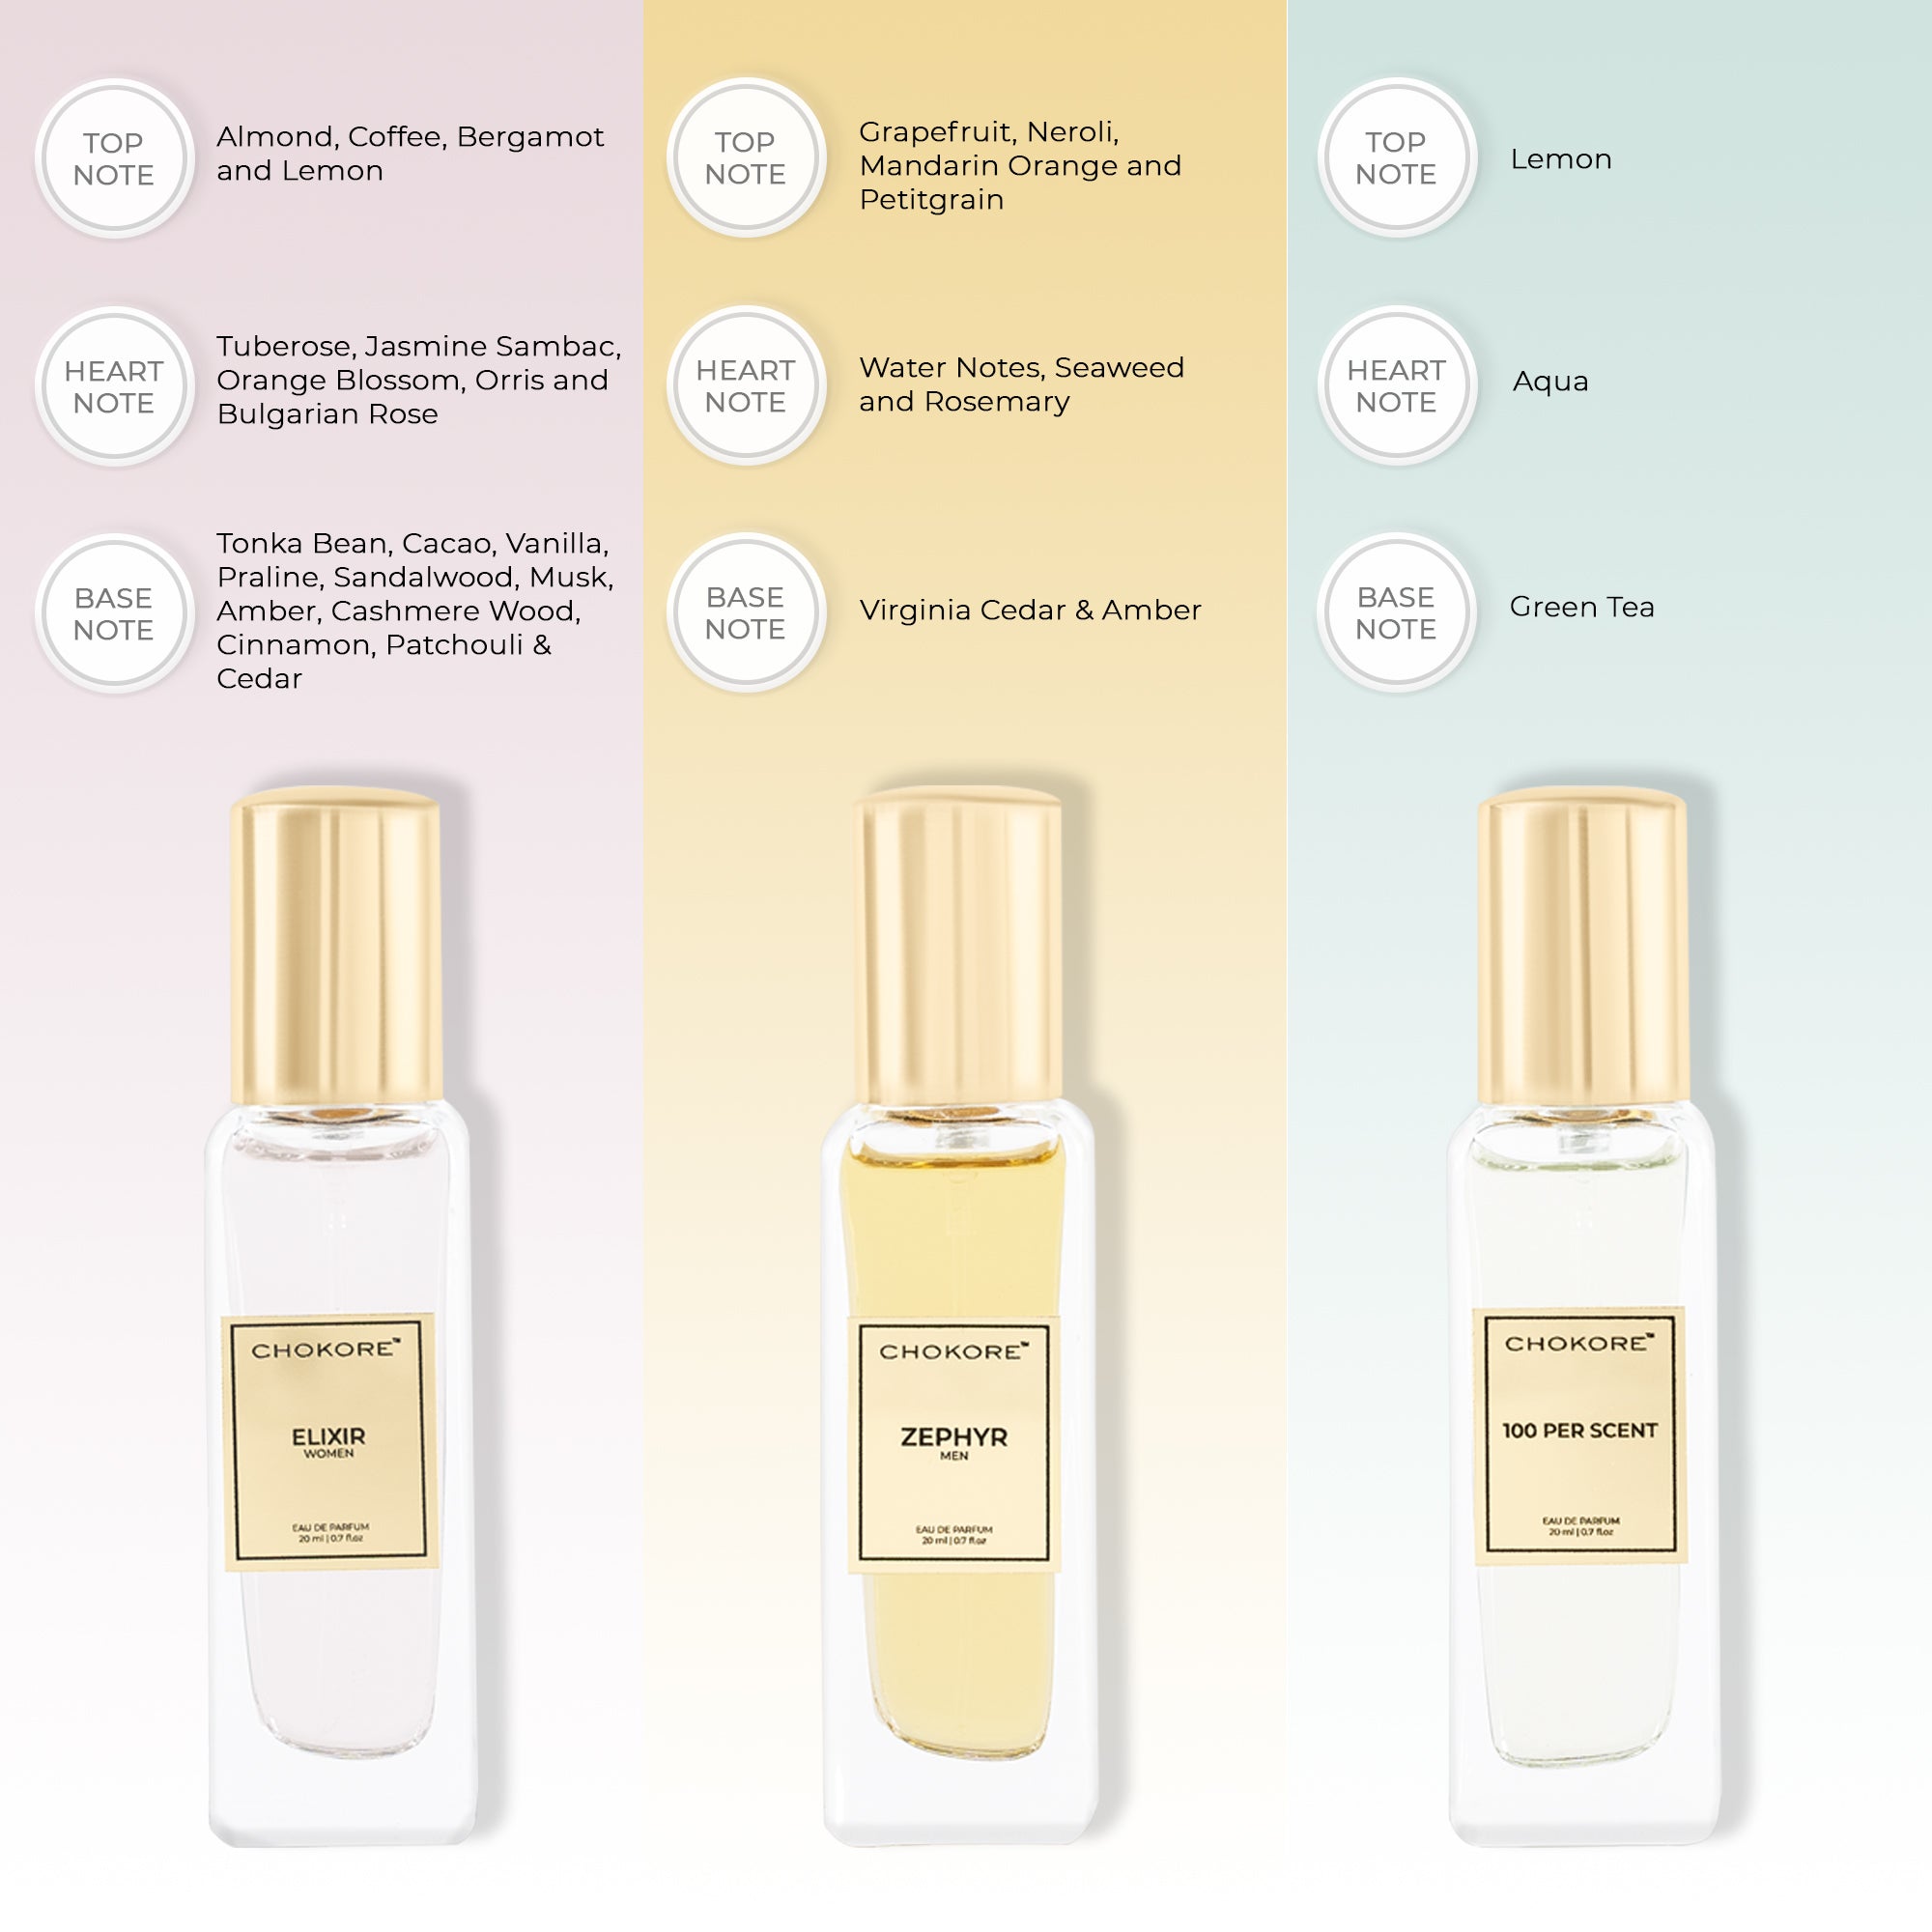 Chokore Perfume Combo Pack of 3 For Men & Women (Zephyr, Elixir, & 100 Per Scent) | 3 x 20 ml